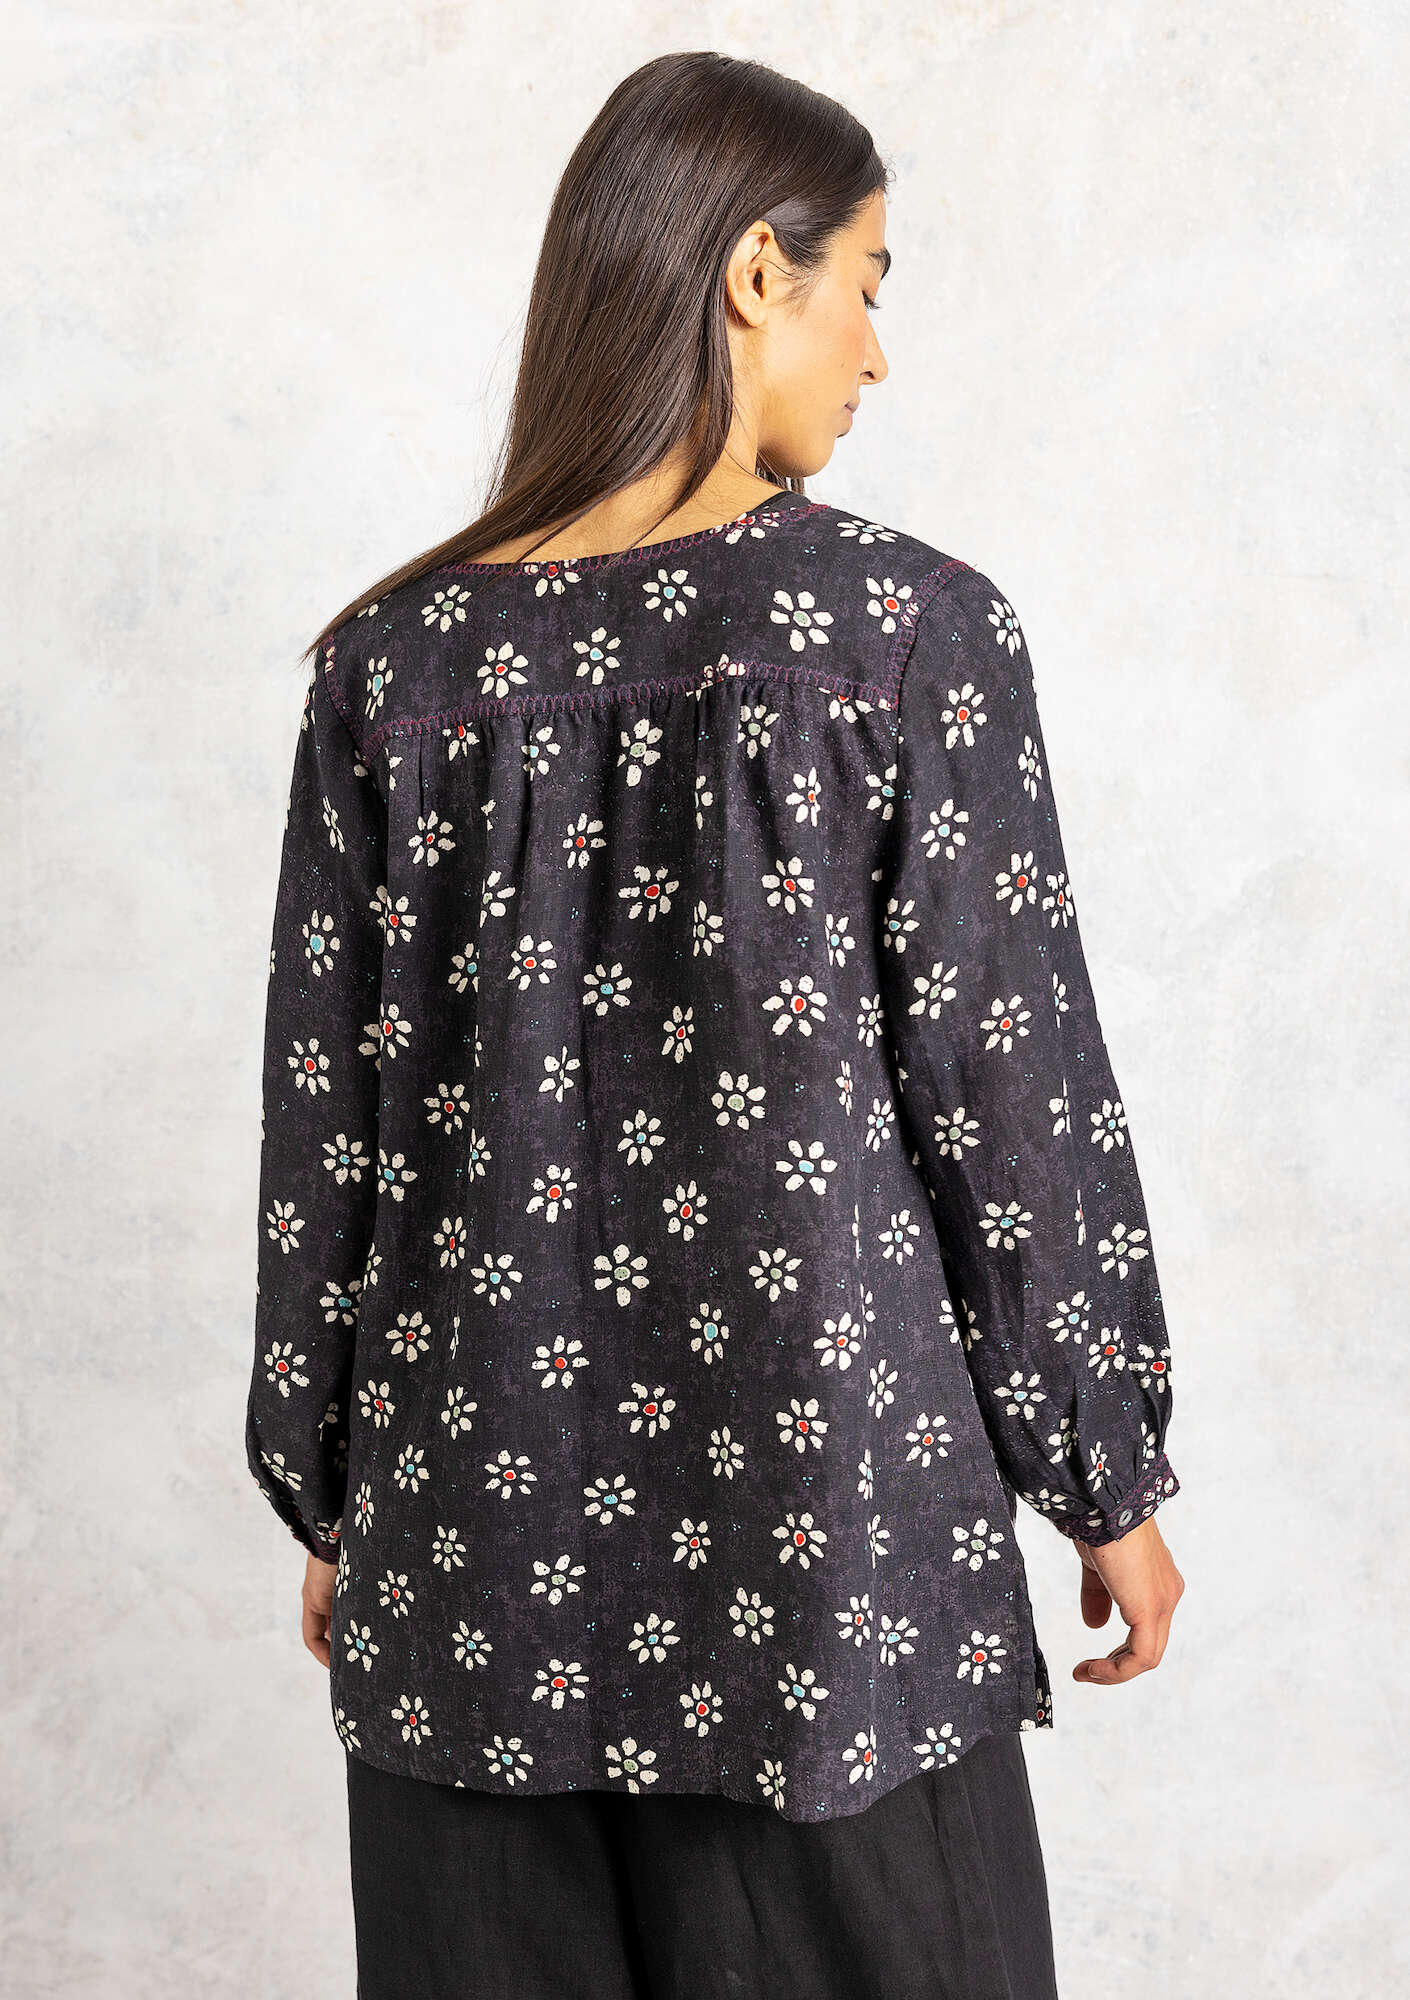 “Ester” woven blouse in linen black/patterned